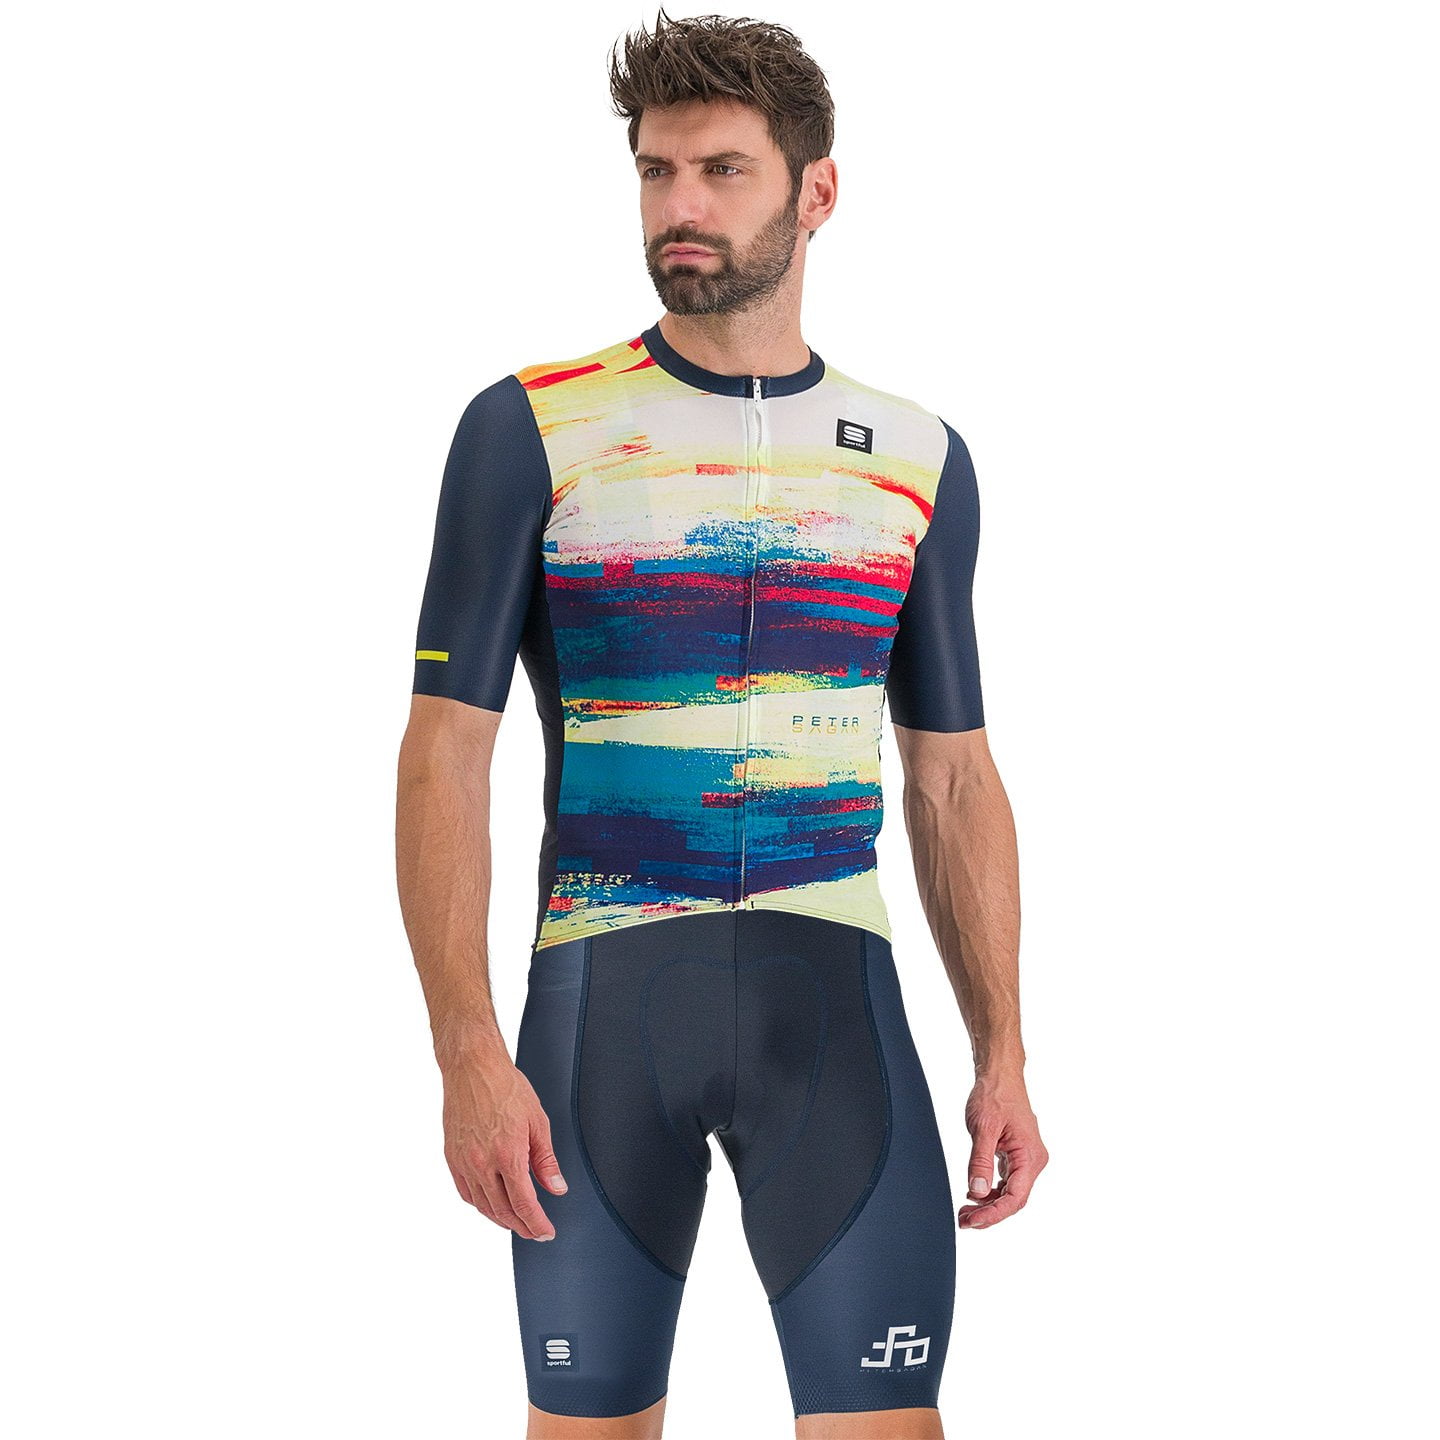 PETER SAGAN 2022 Set (cycling jersey + cycling shorts) Set (2 pieces), for men, Cycling clothing